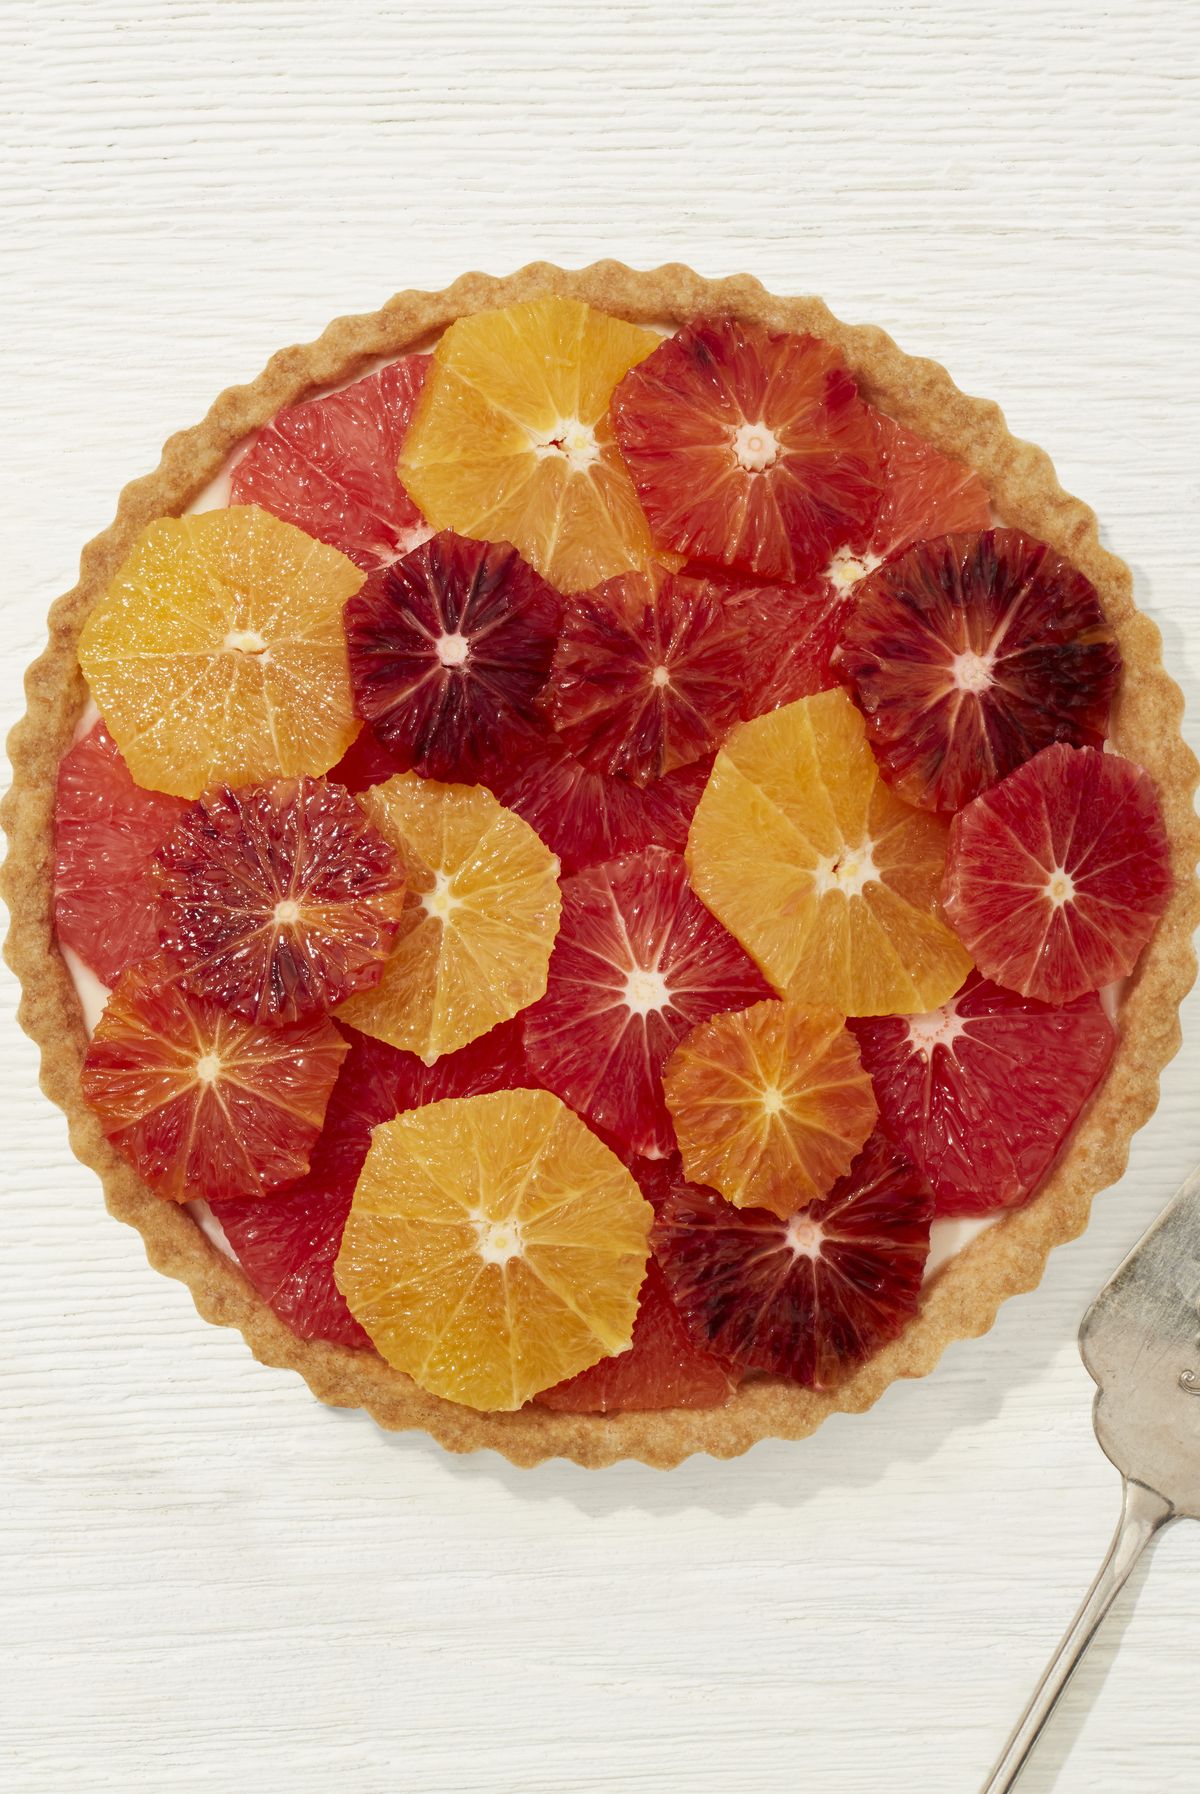 vanilla tart with geometric citrus design on top